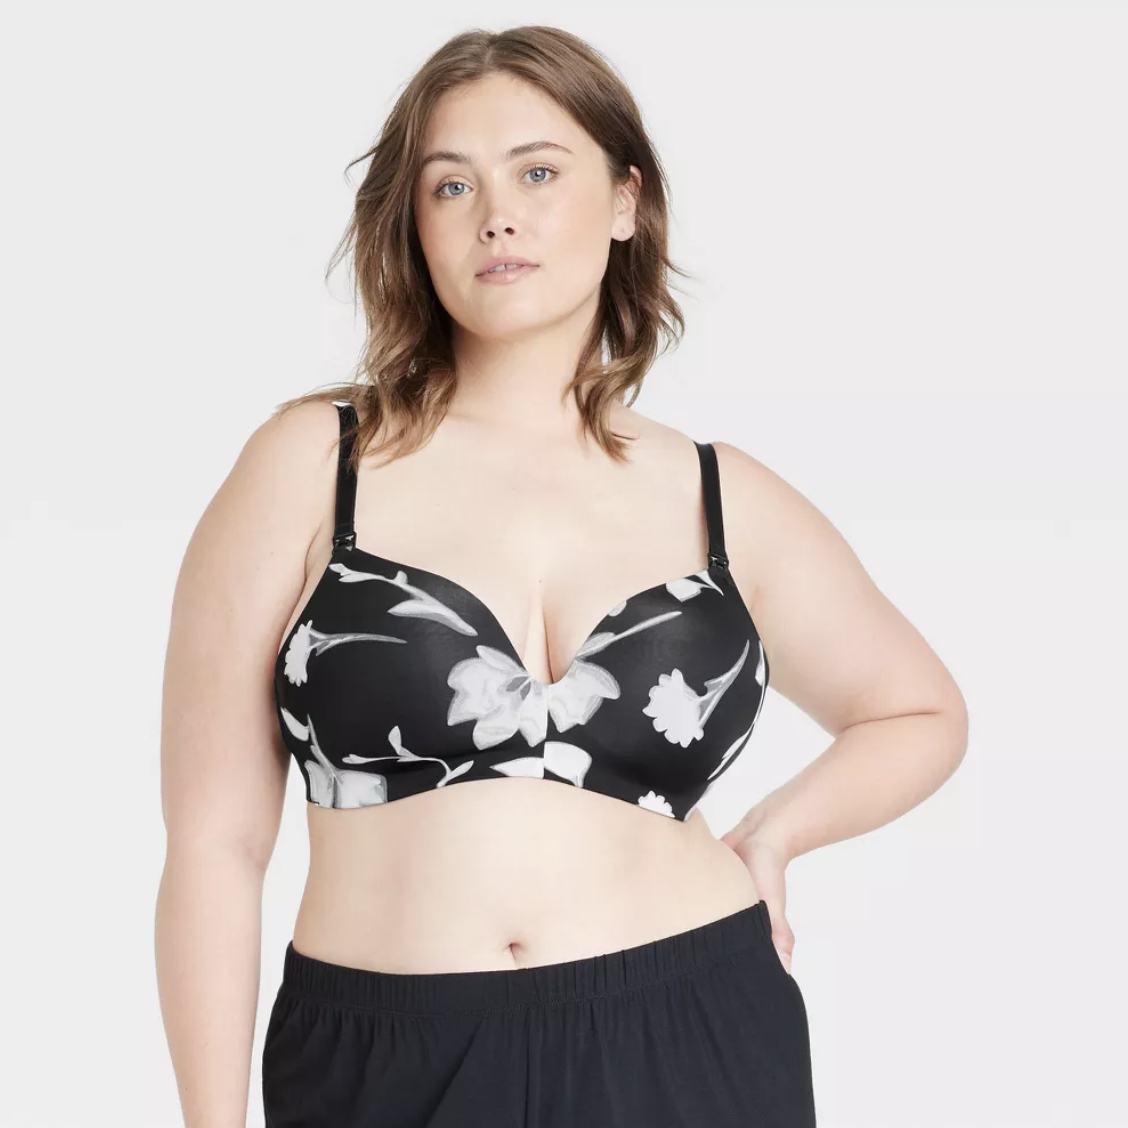 model wearing a black and white floral print nursing bra